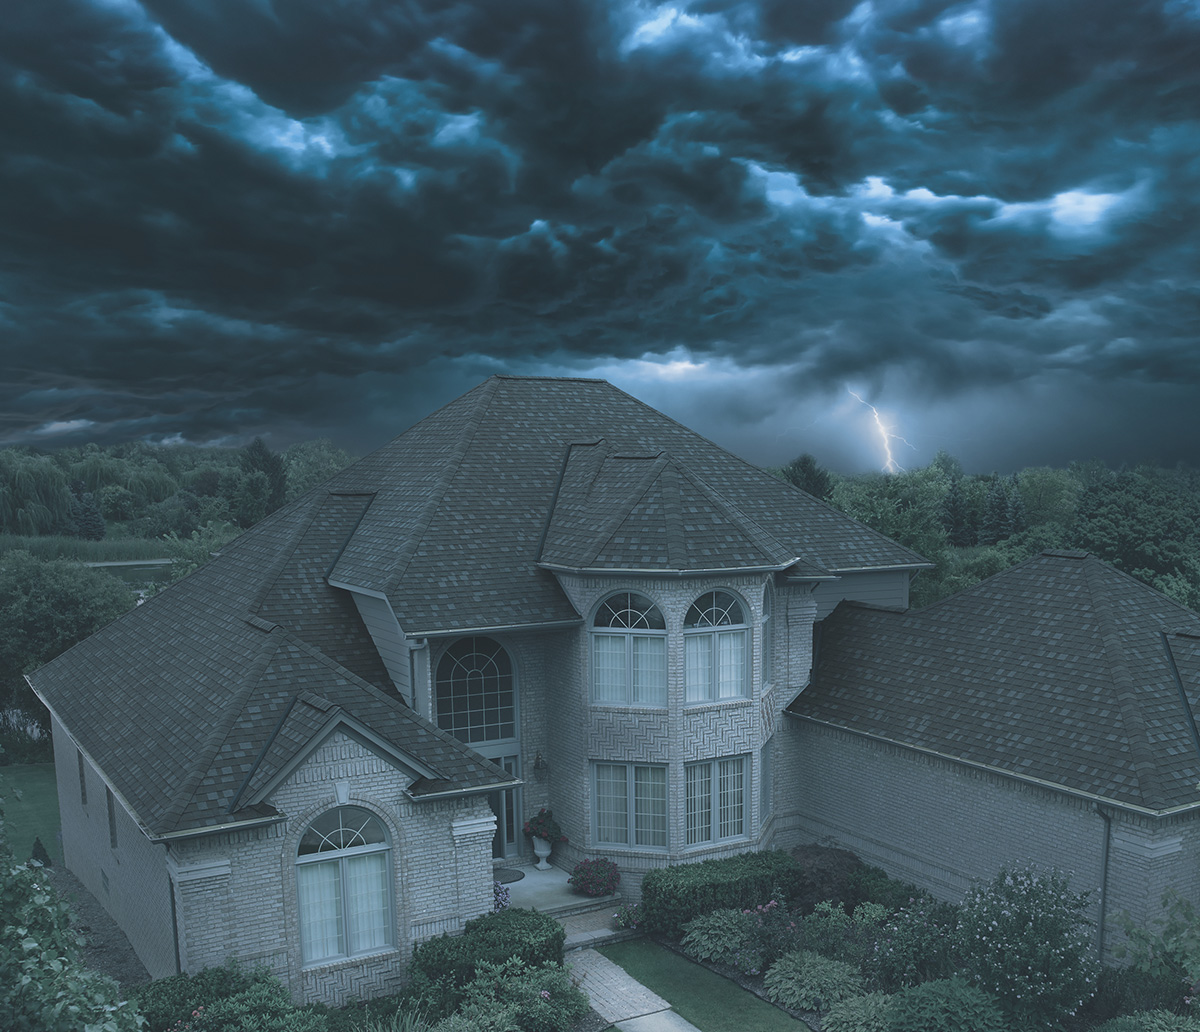 IKO Dynasty Shingles on home - dark clouds above